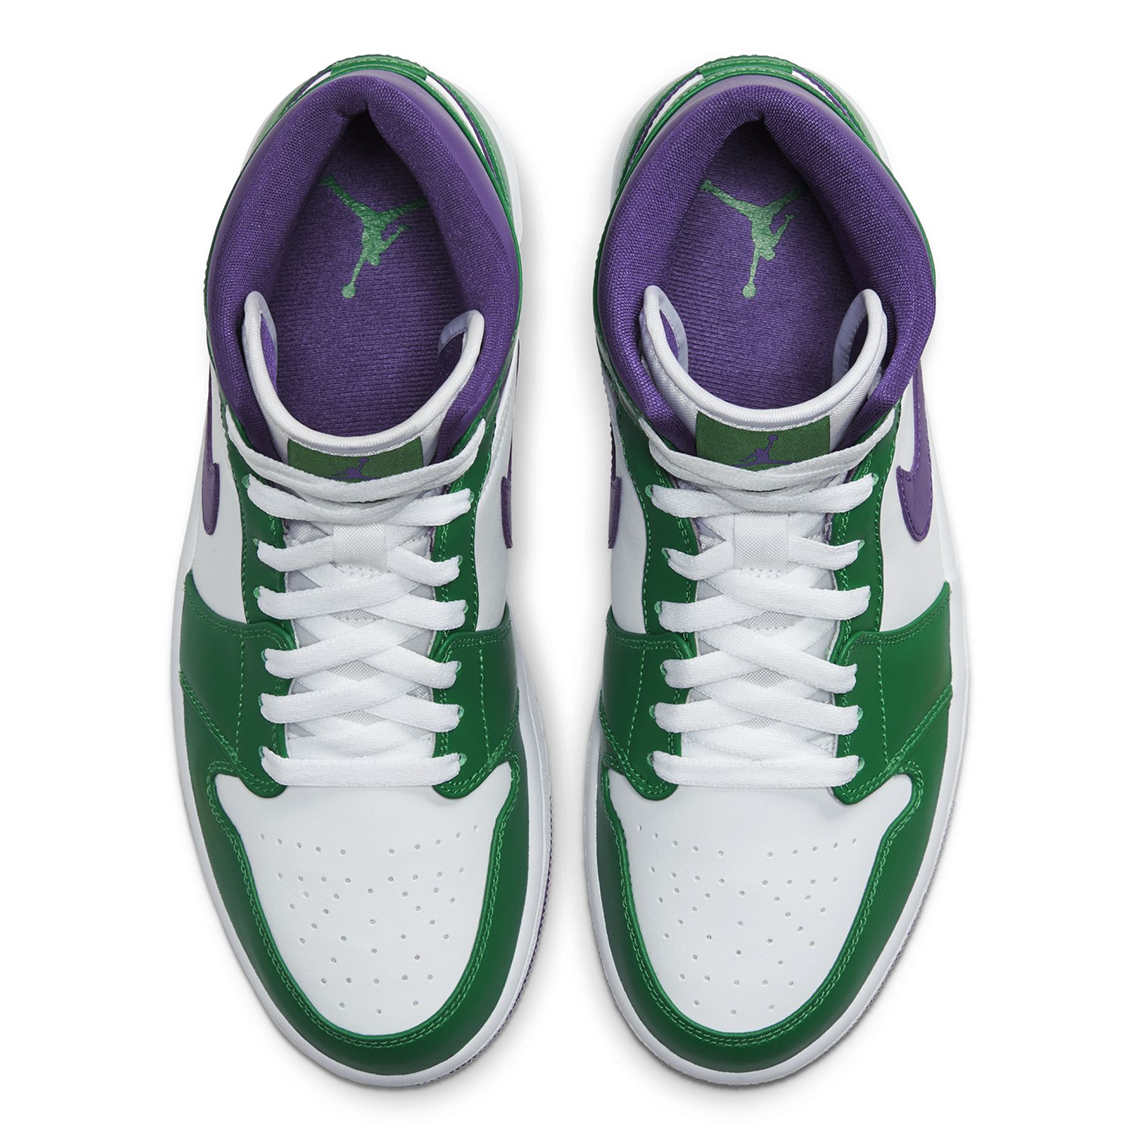 green and purple jordans 1